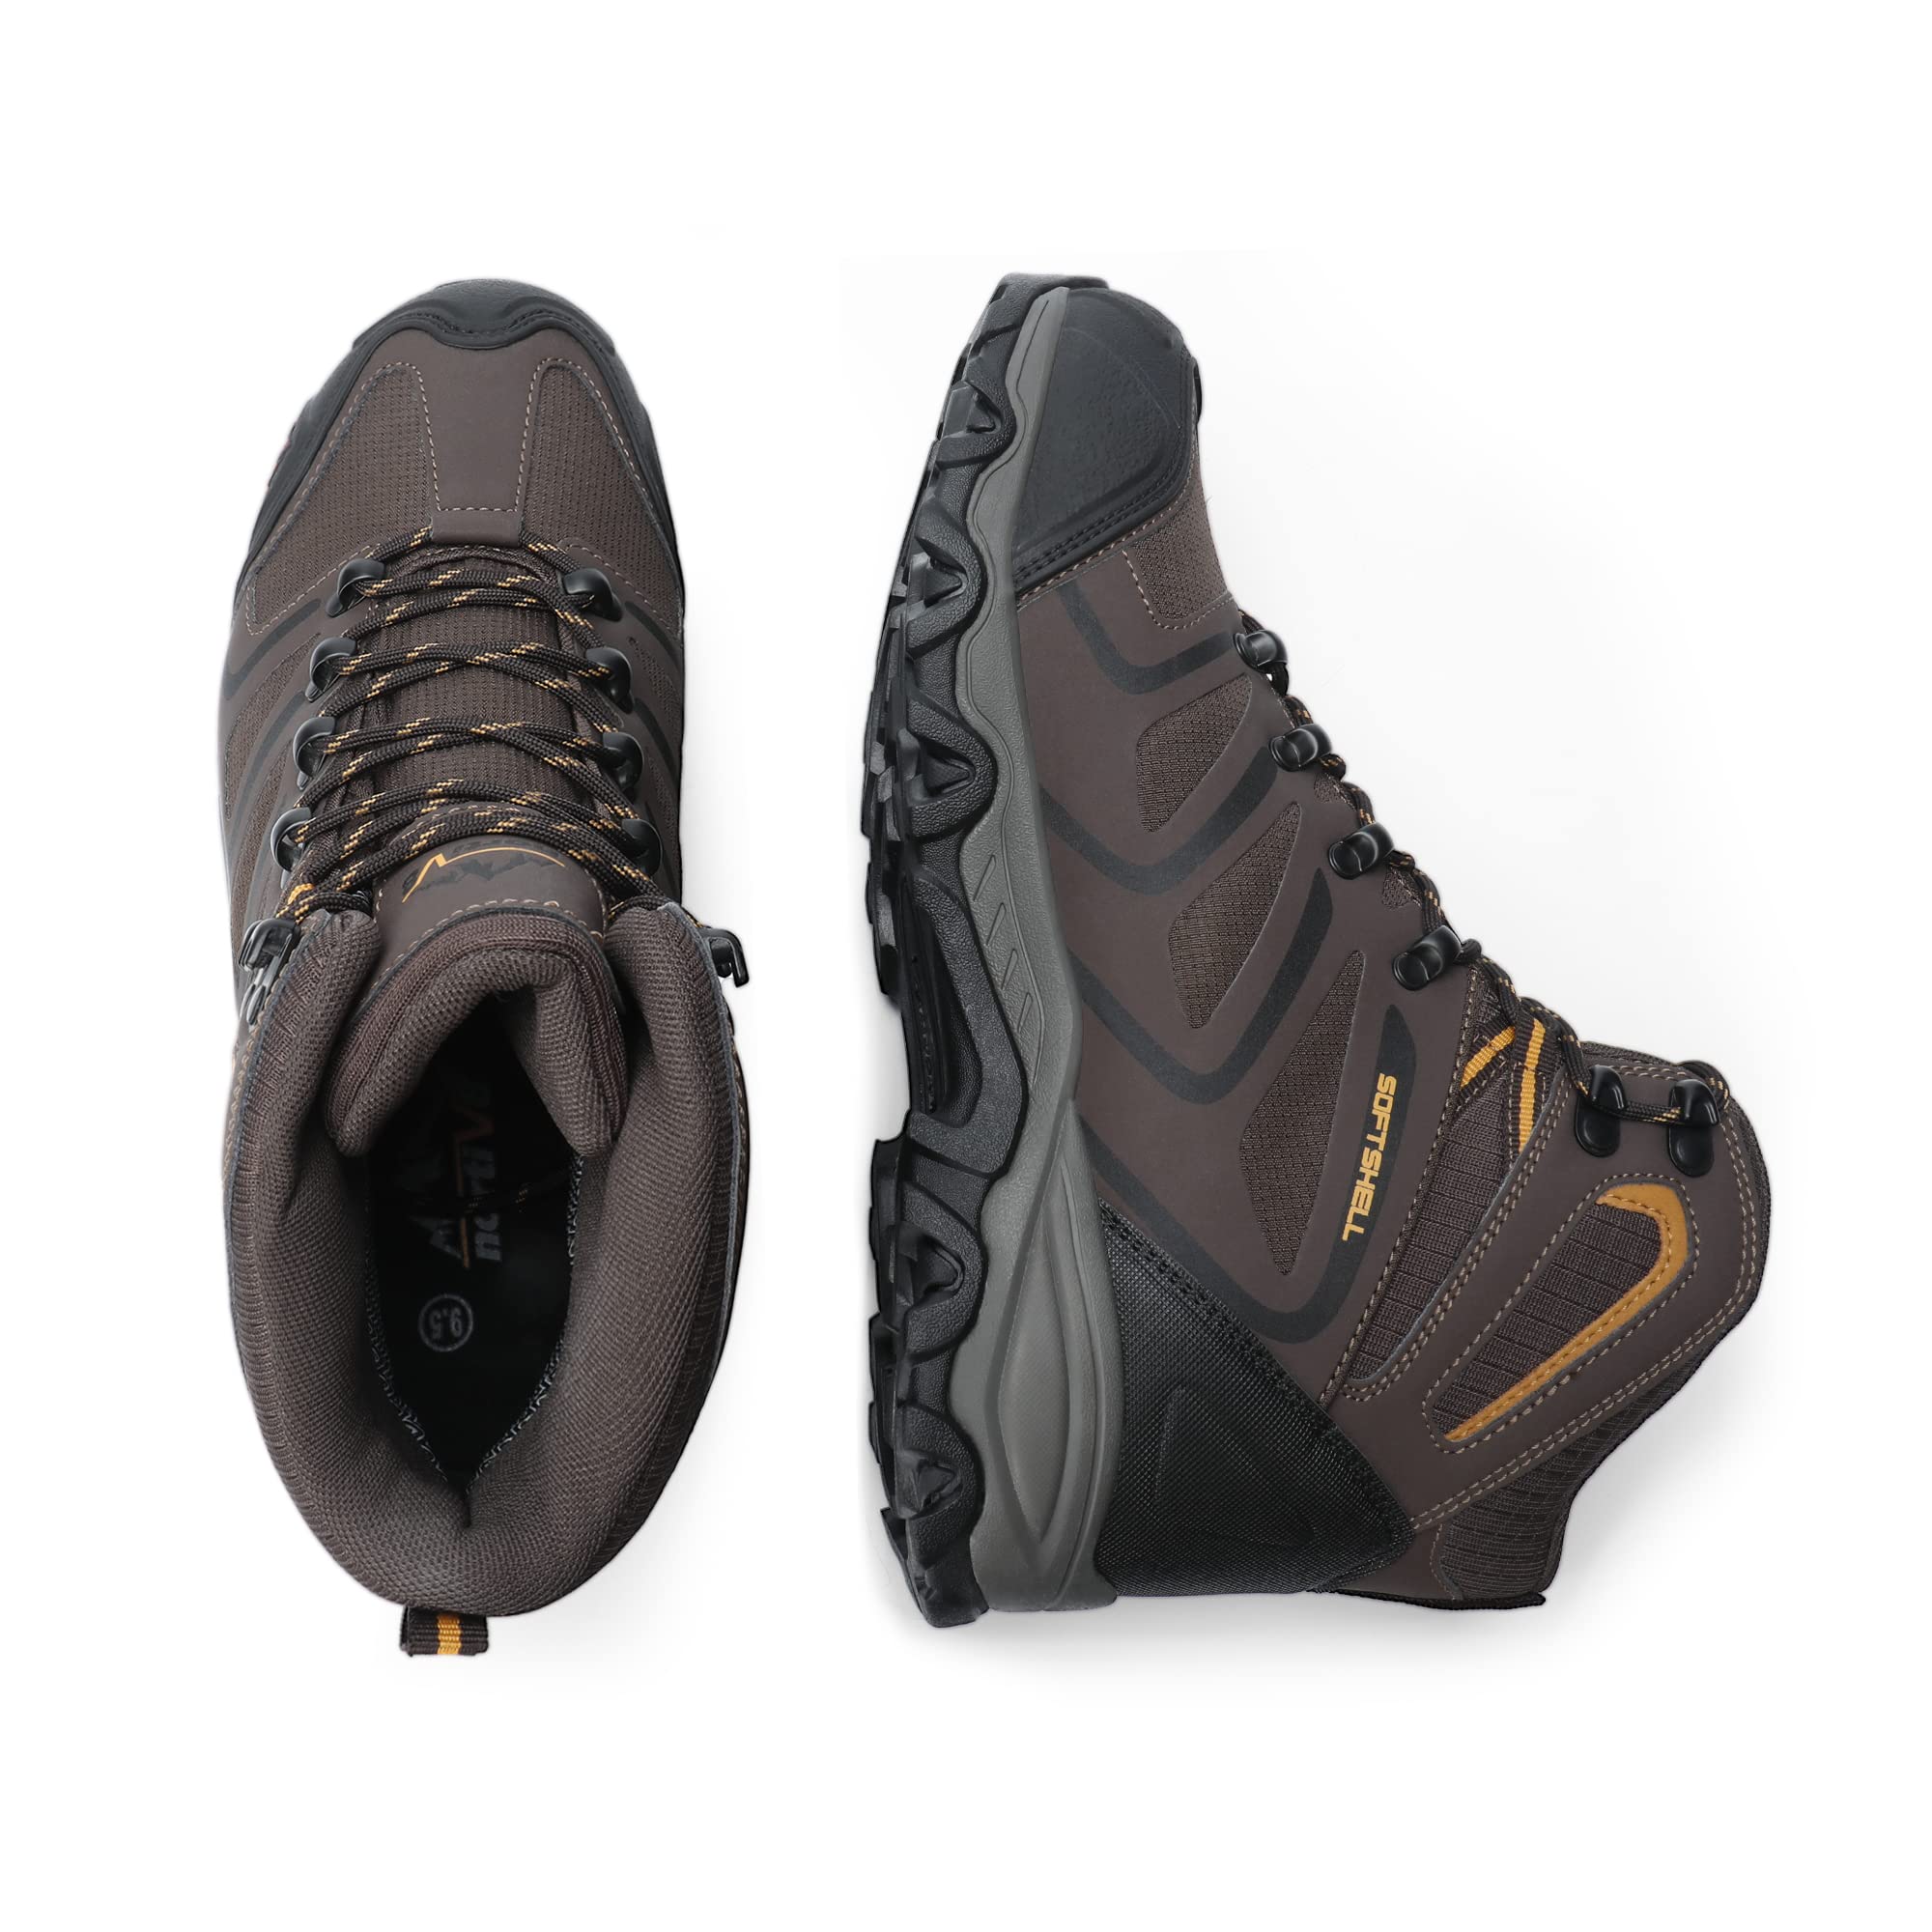 NORTIV 8 Men's Ankle High Waterproof Hiking Boots Outdoor Lightweight Shoes Trekking Trails